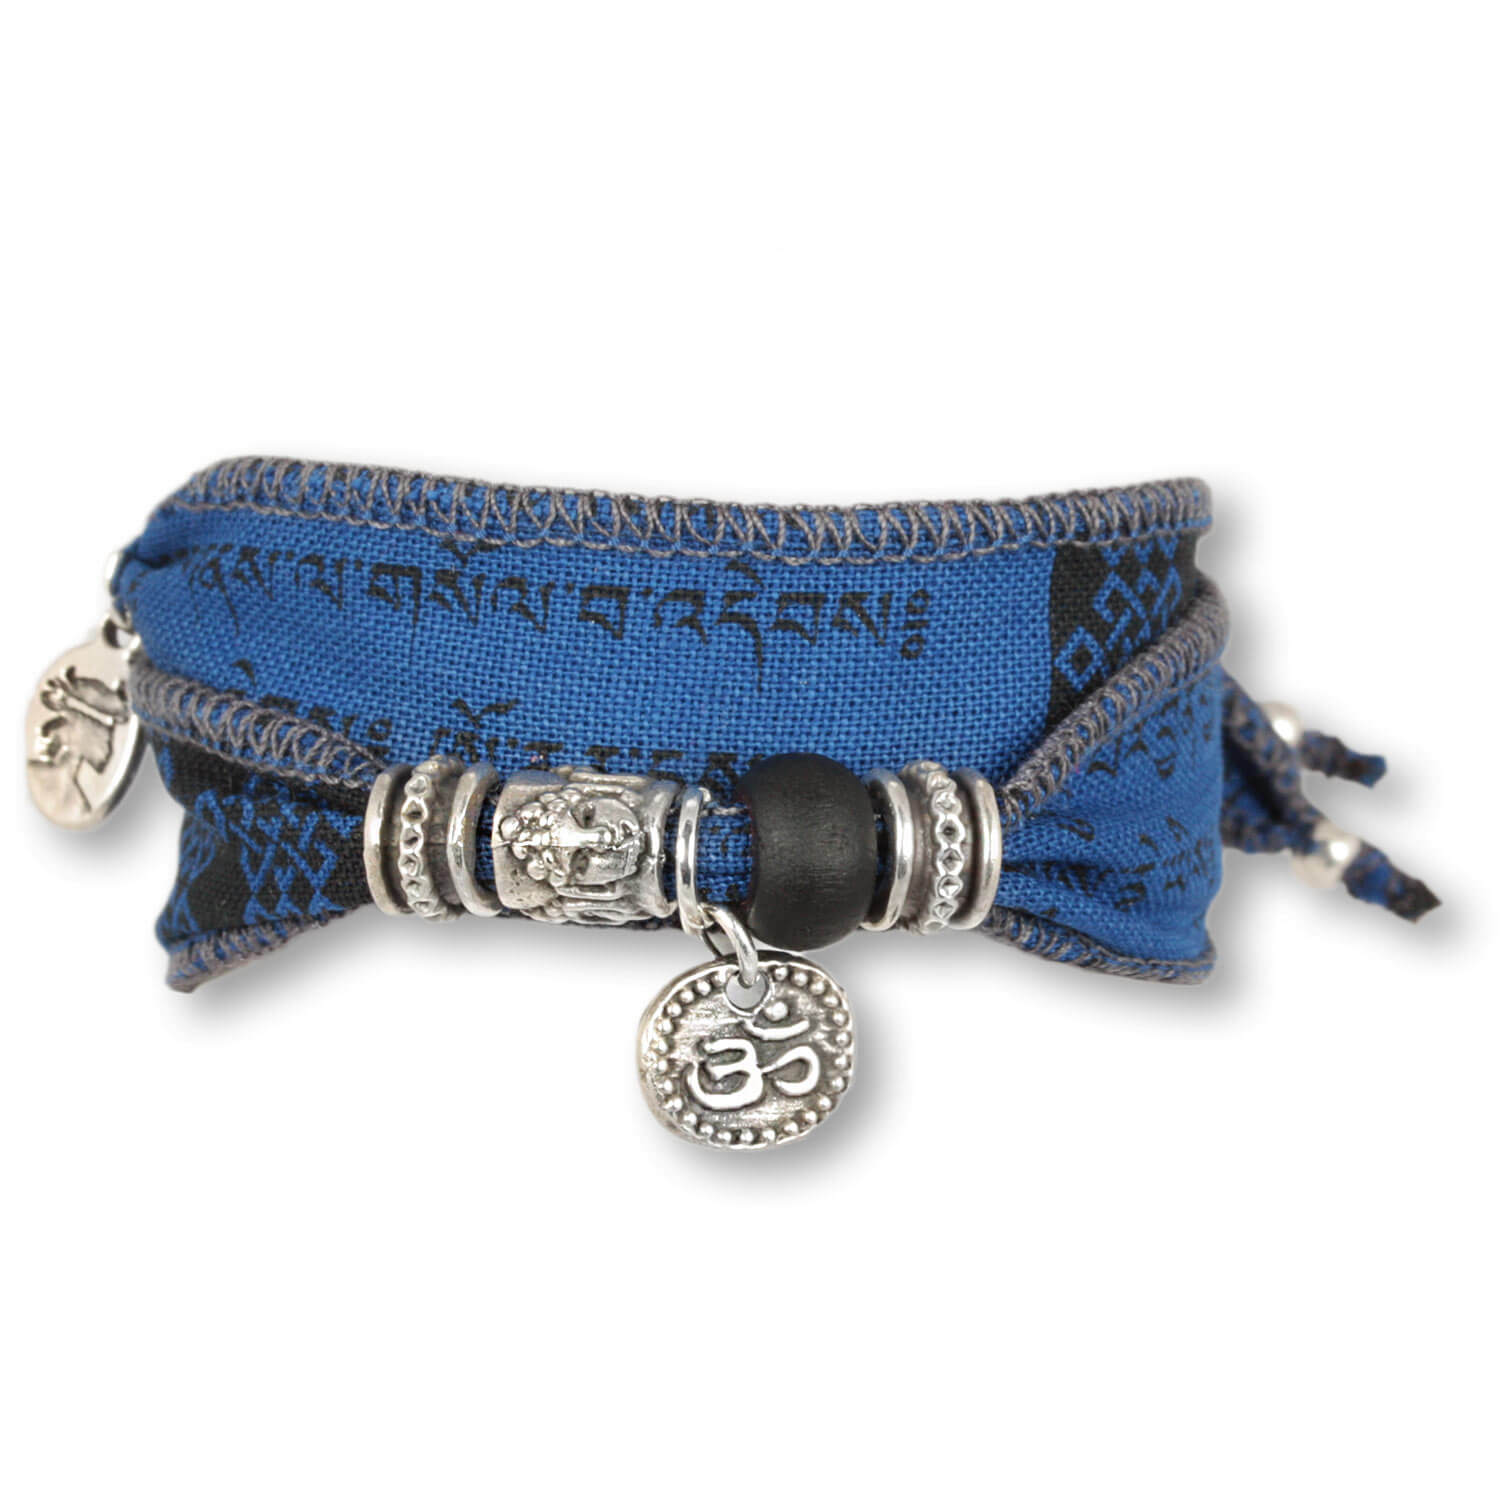 Space Mantra - Tibetan Wish bracelet made from Tibetan prayer flags